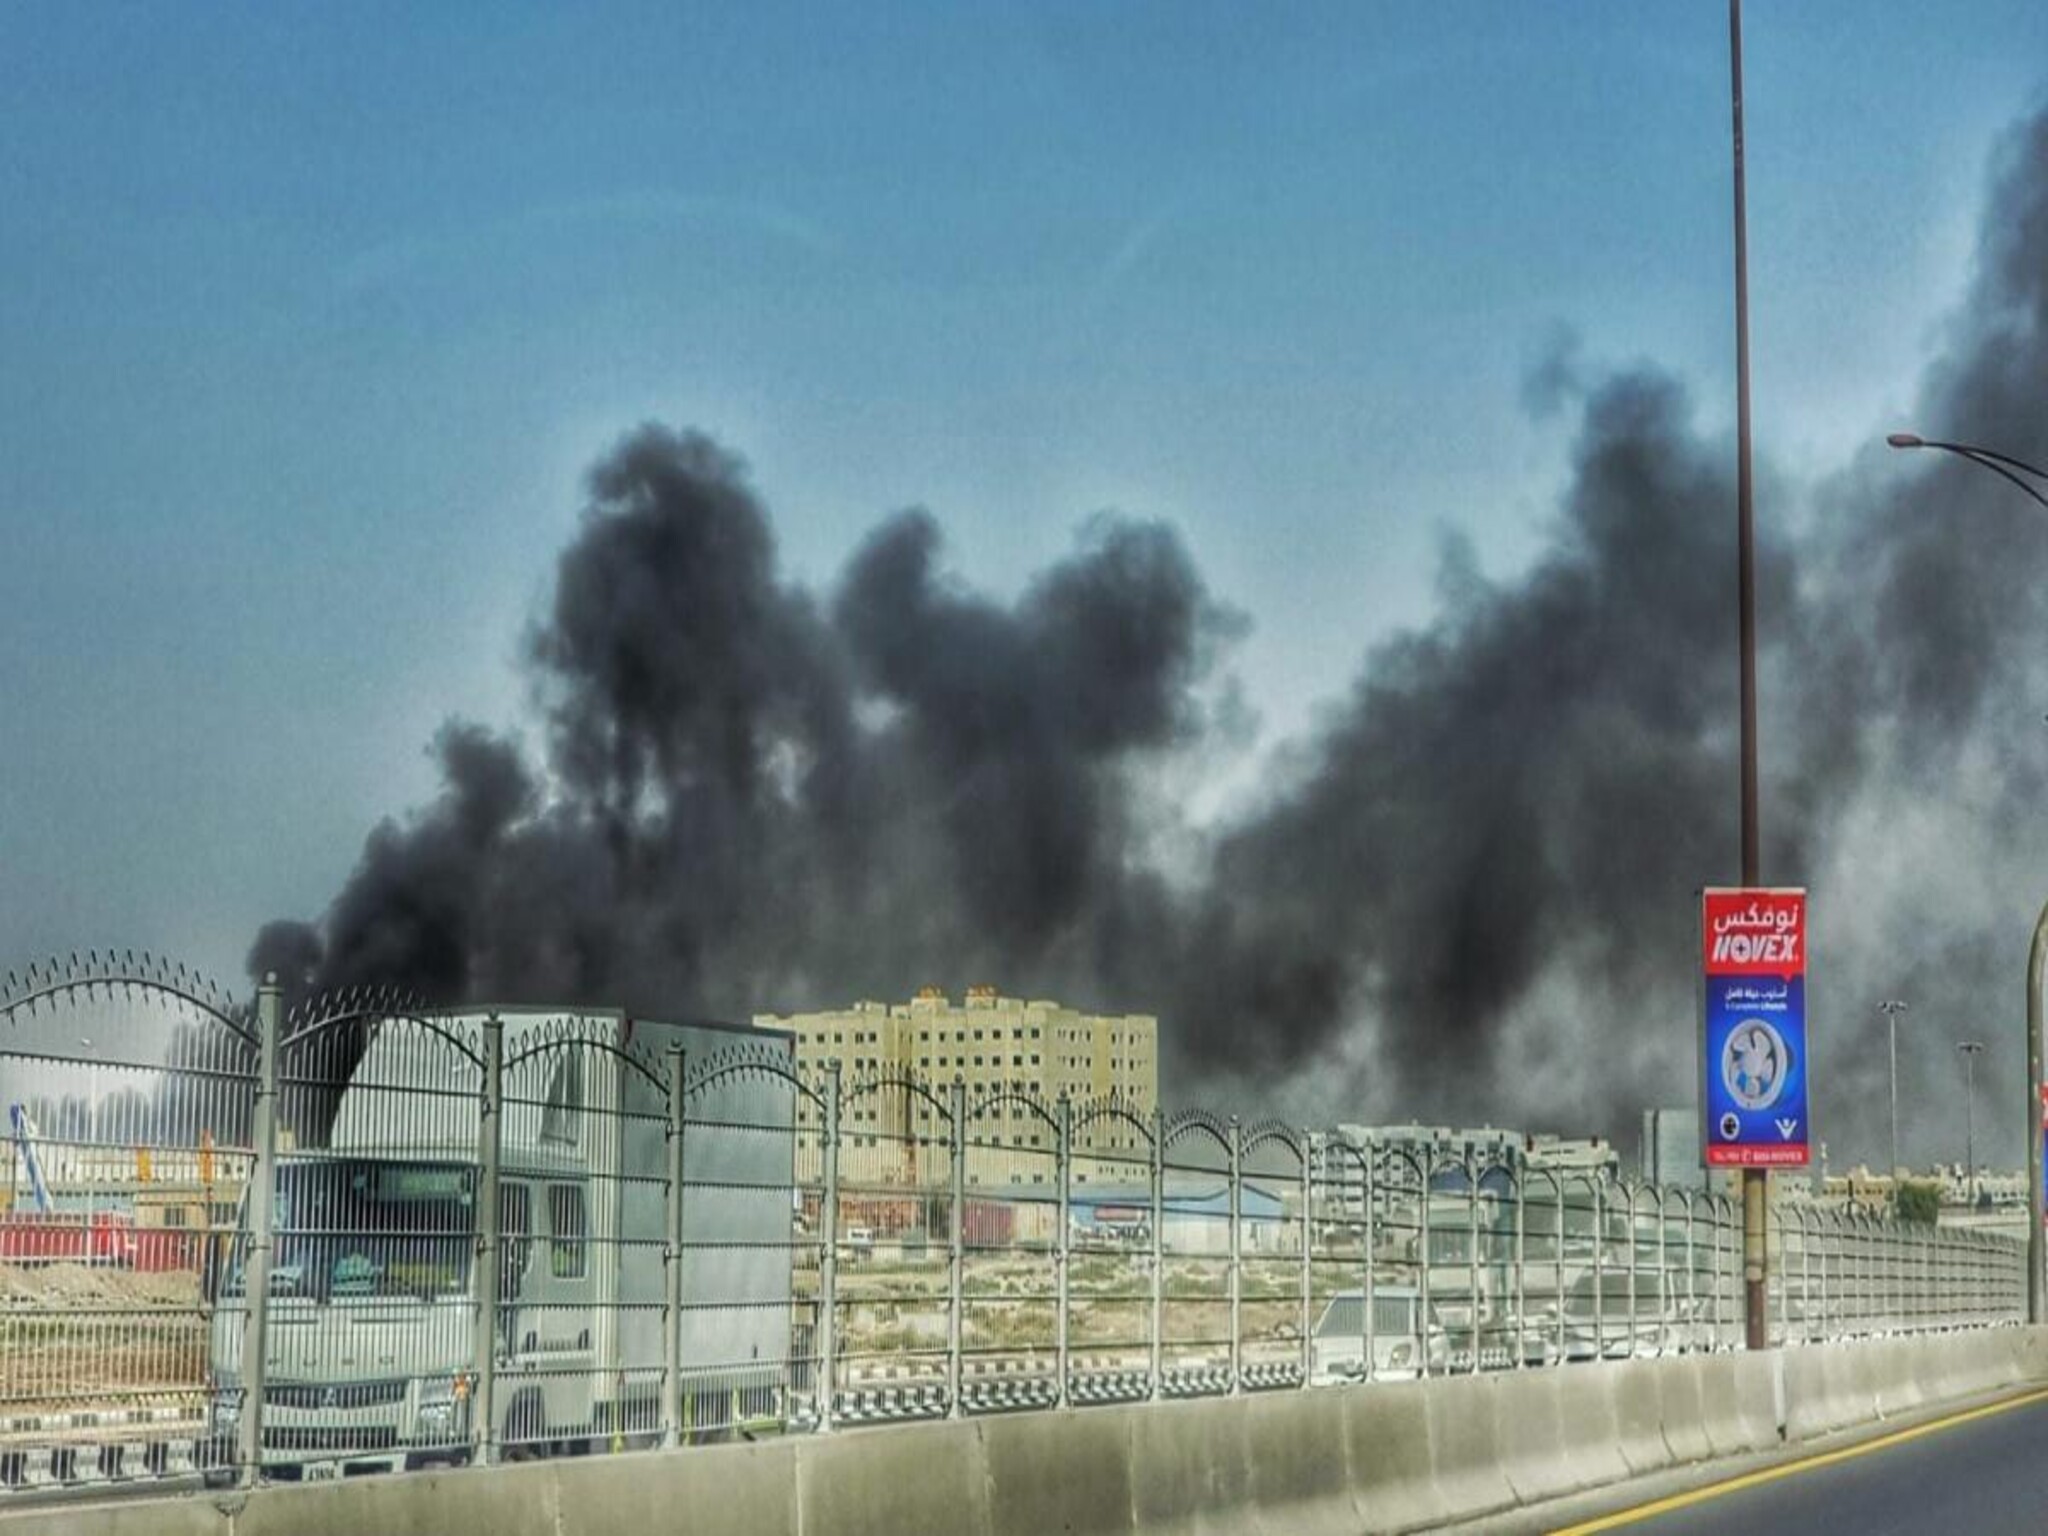 UAE: Massive Fire Engulfs Sharjah, Residents Report Thick Smoke Billowing